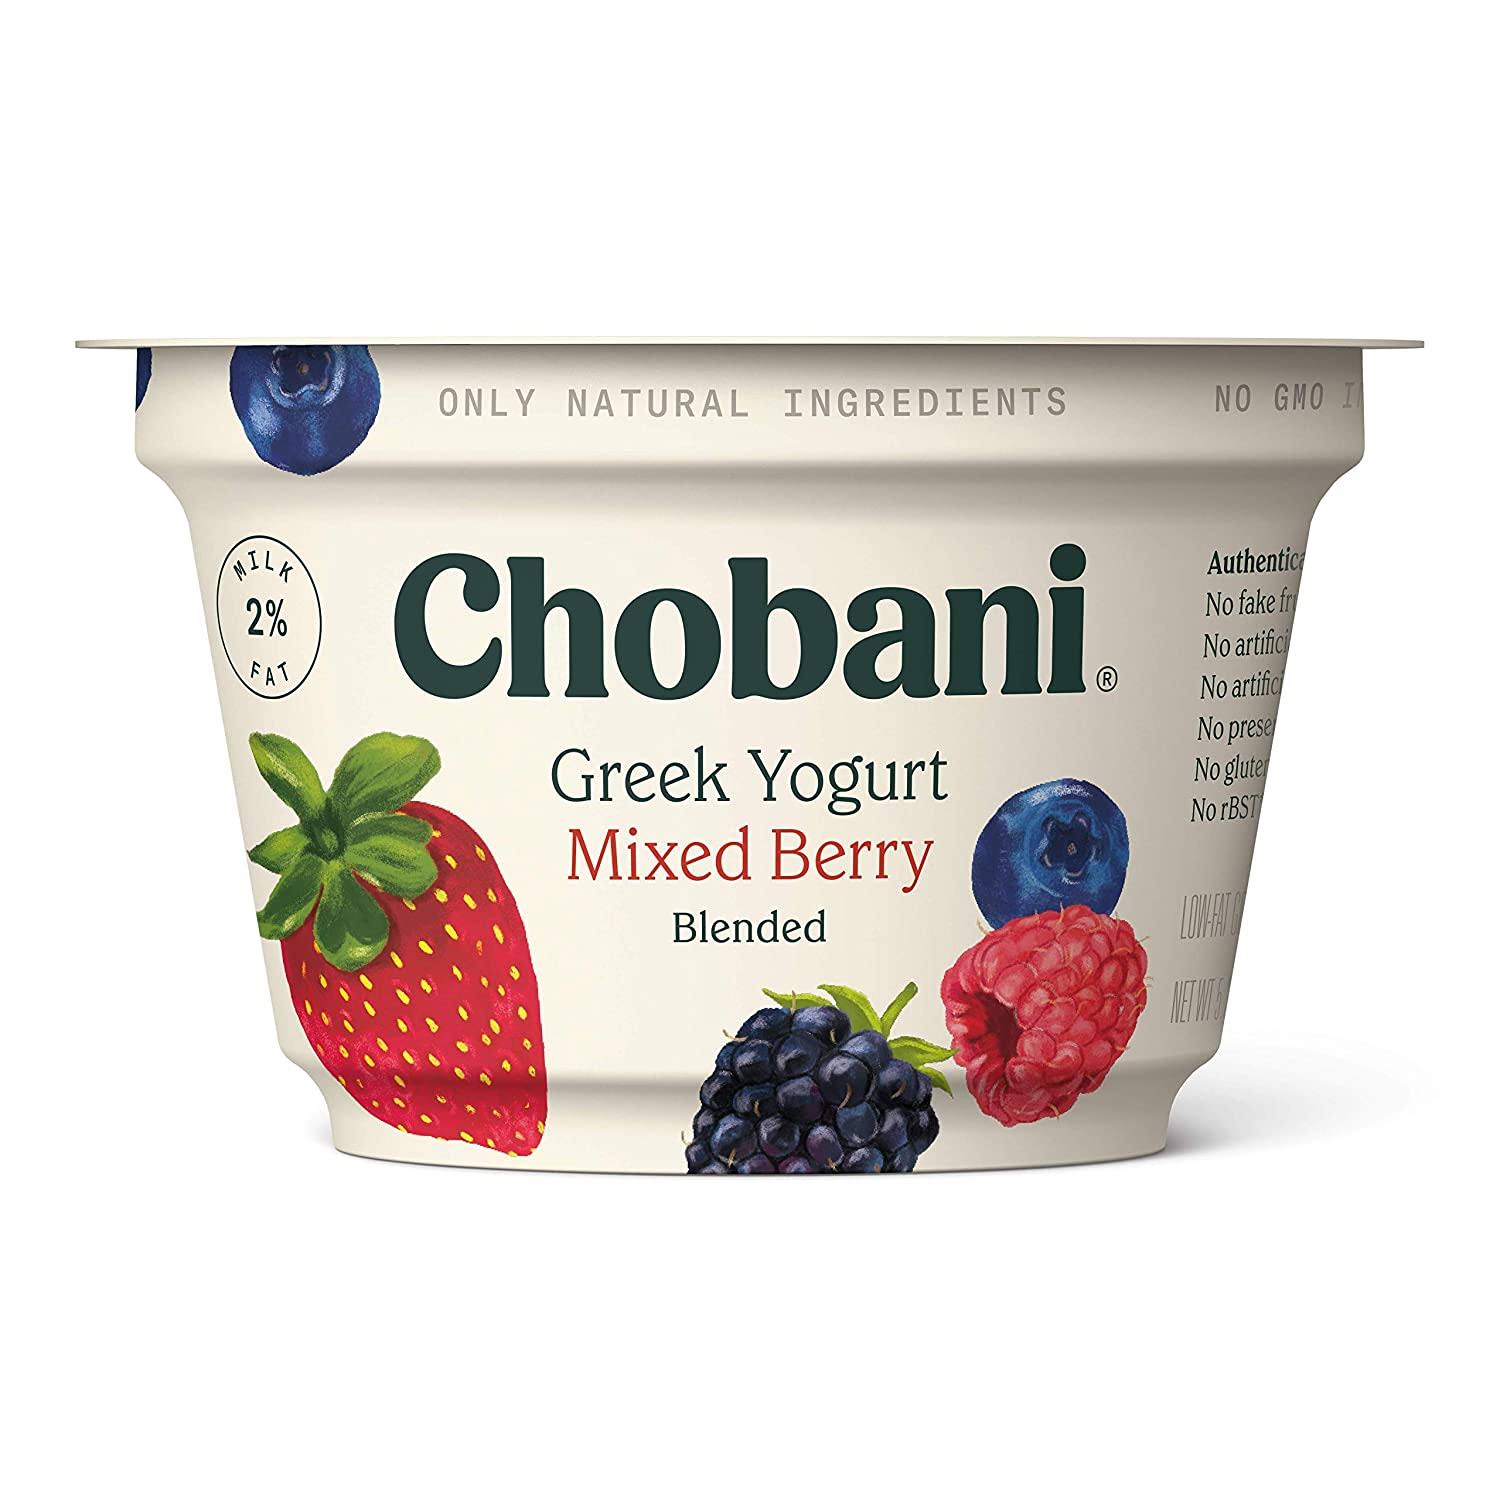 Chobani Mixed Berry Blended Greek Yogurt - 5.3oz